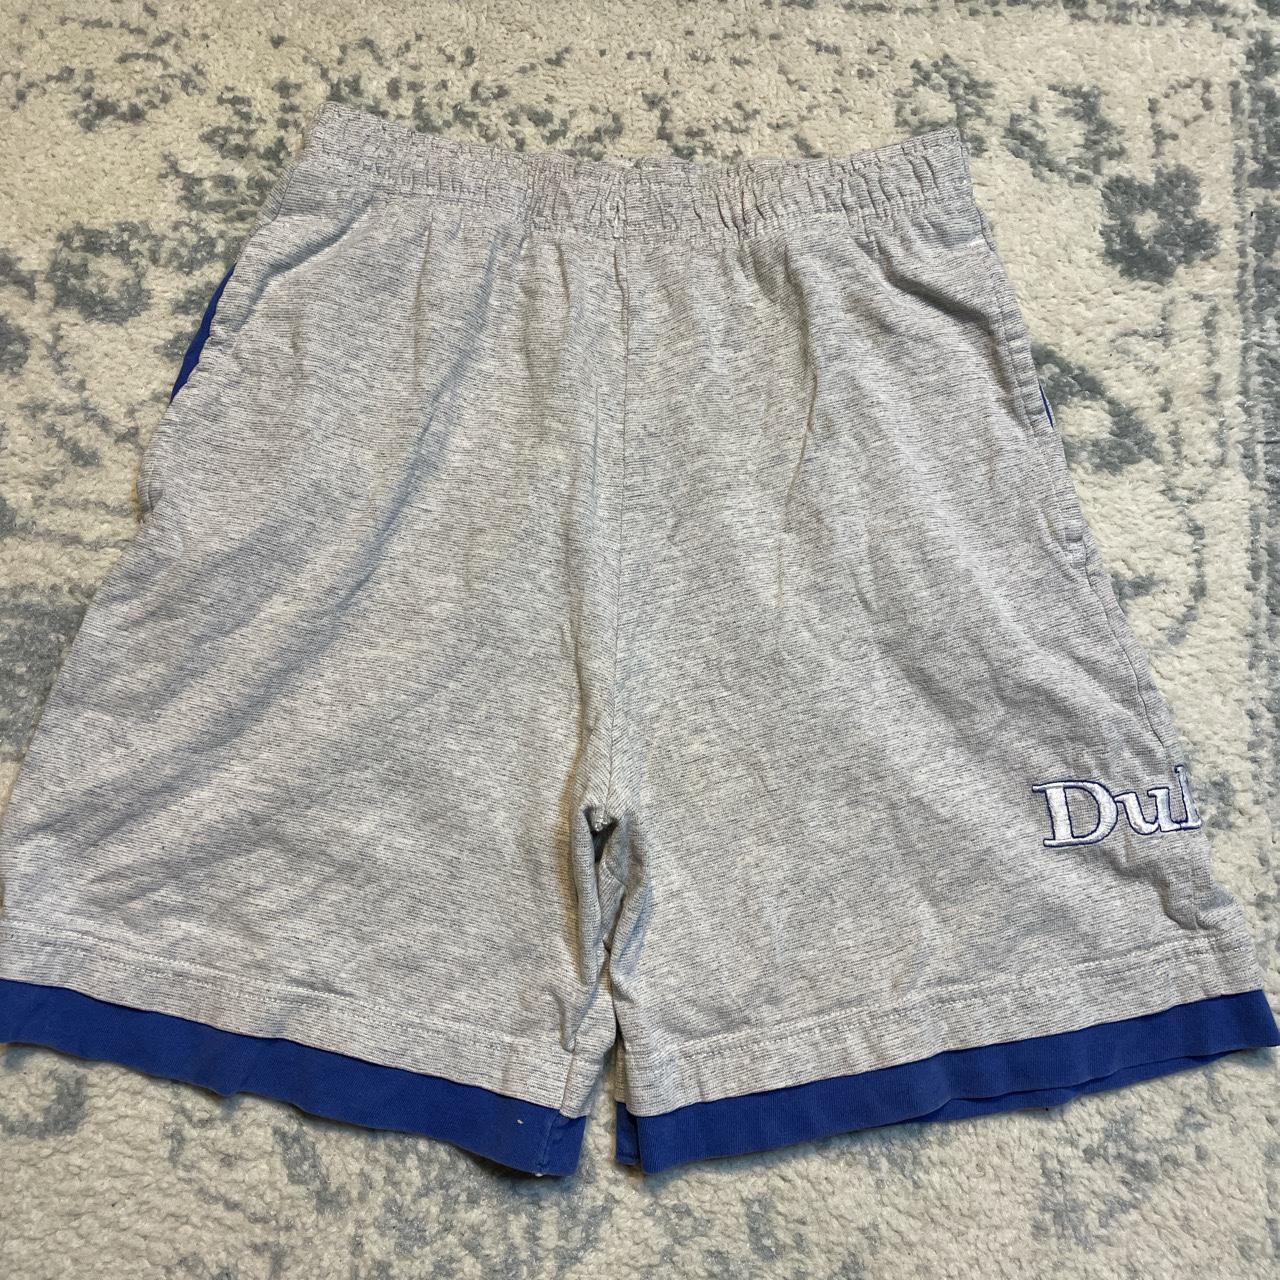 Duke Men's Grey and Blue Shorts (3)